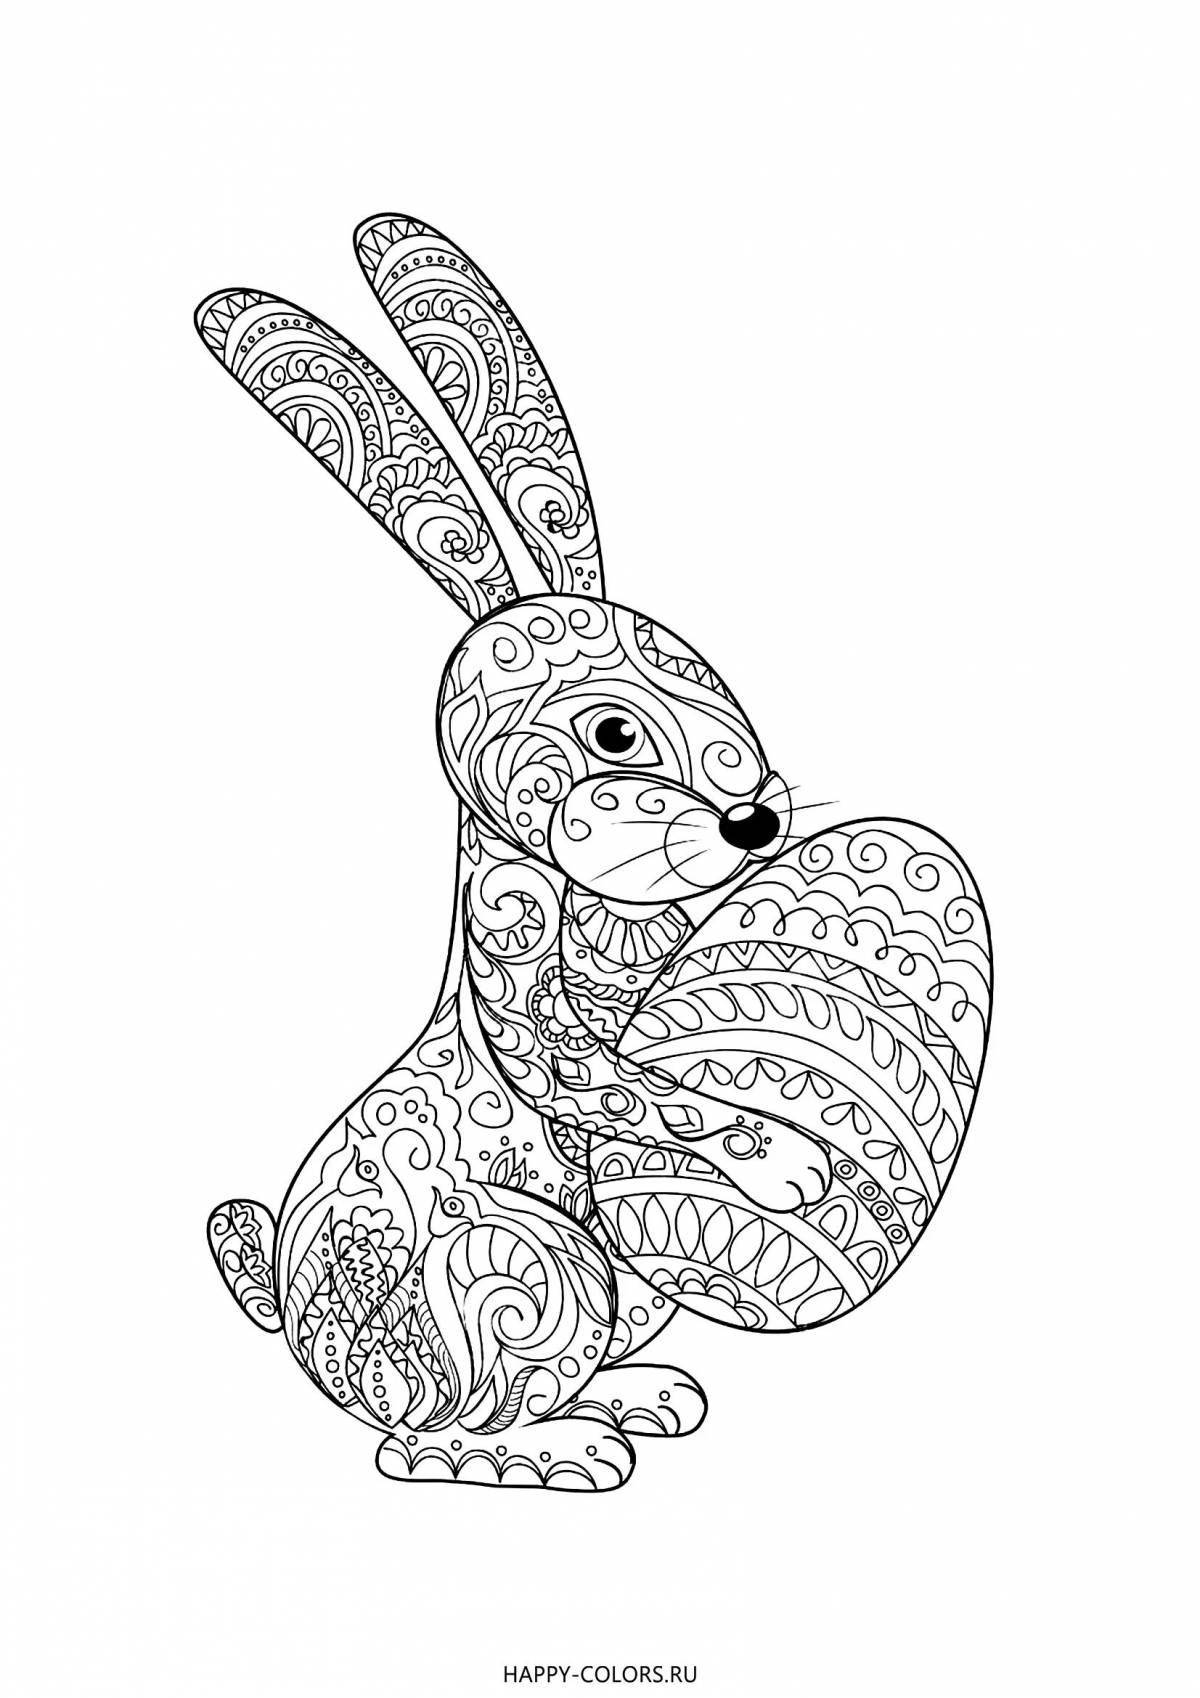 Funny antistress rabbit coloring book